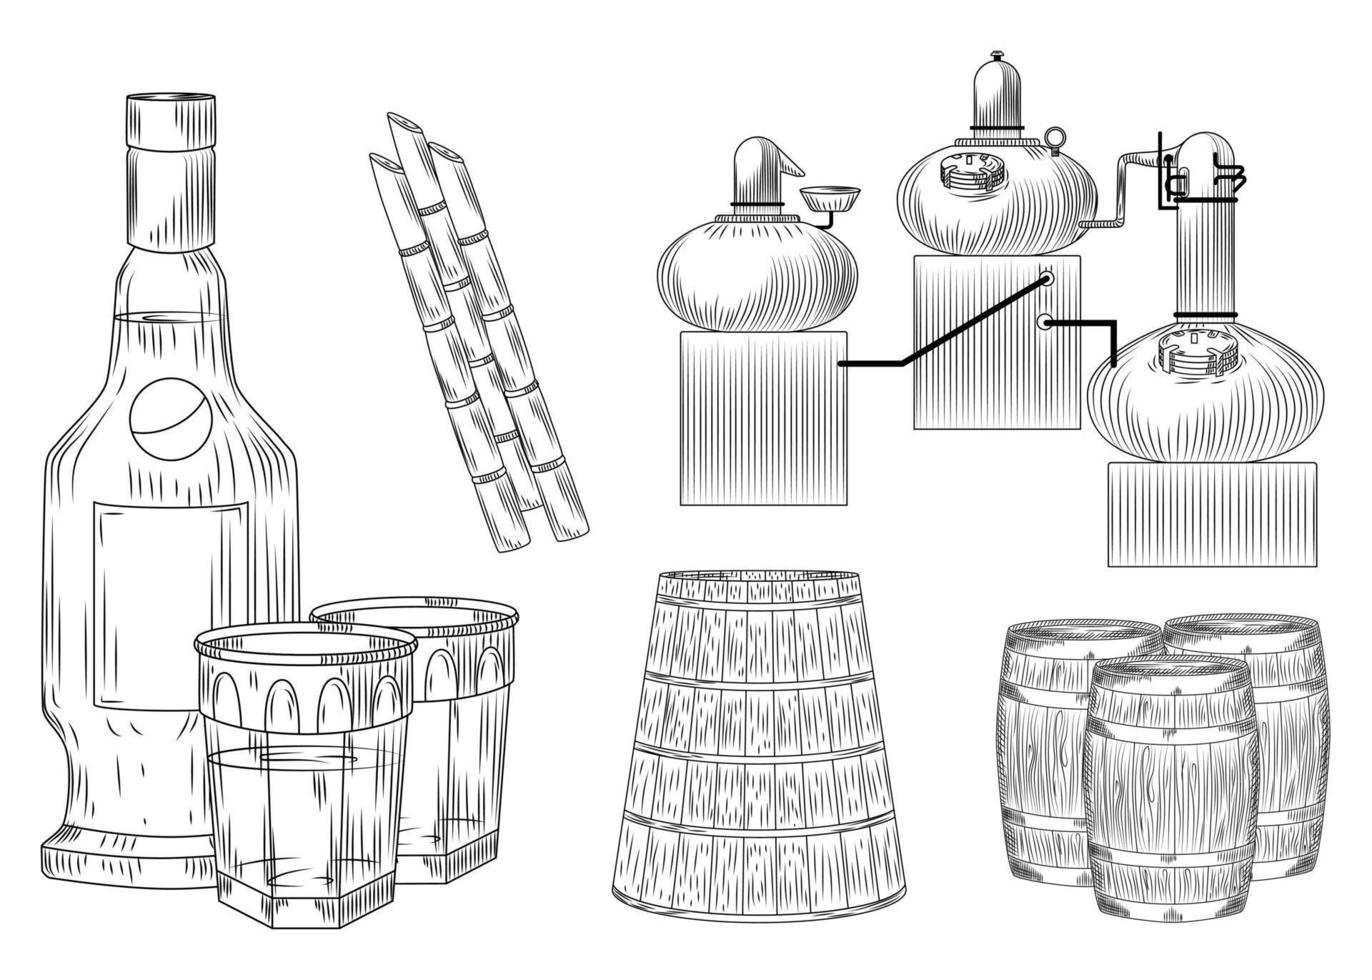 definir álcool cachaça no estilo doodle em fundo branco. copo e garrafa, cana-de-açúcar, barril, alambique. gravura contorno preto estilo vintage. vetor